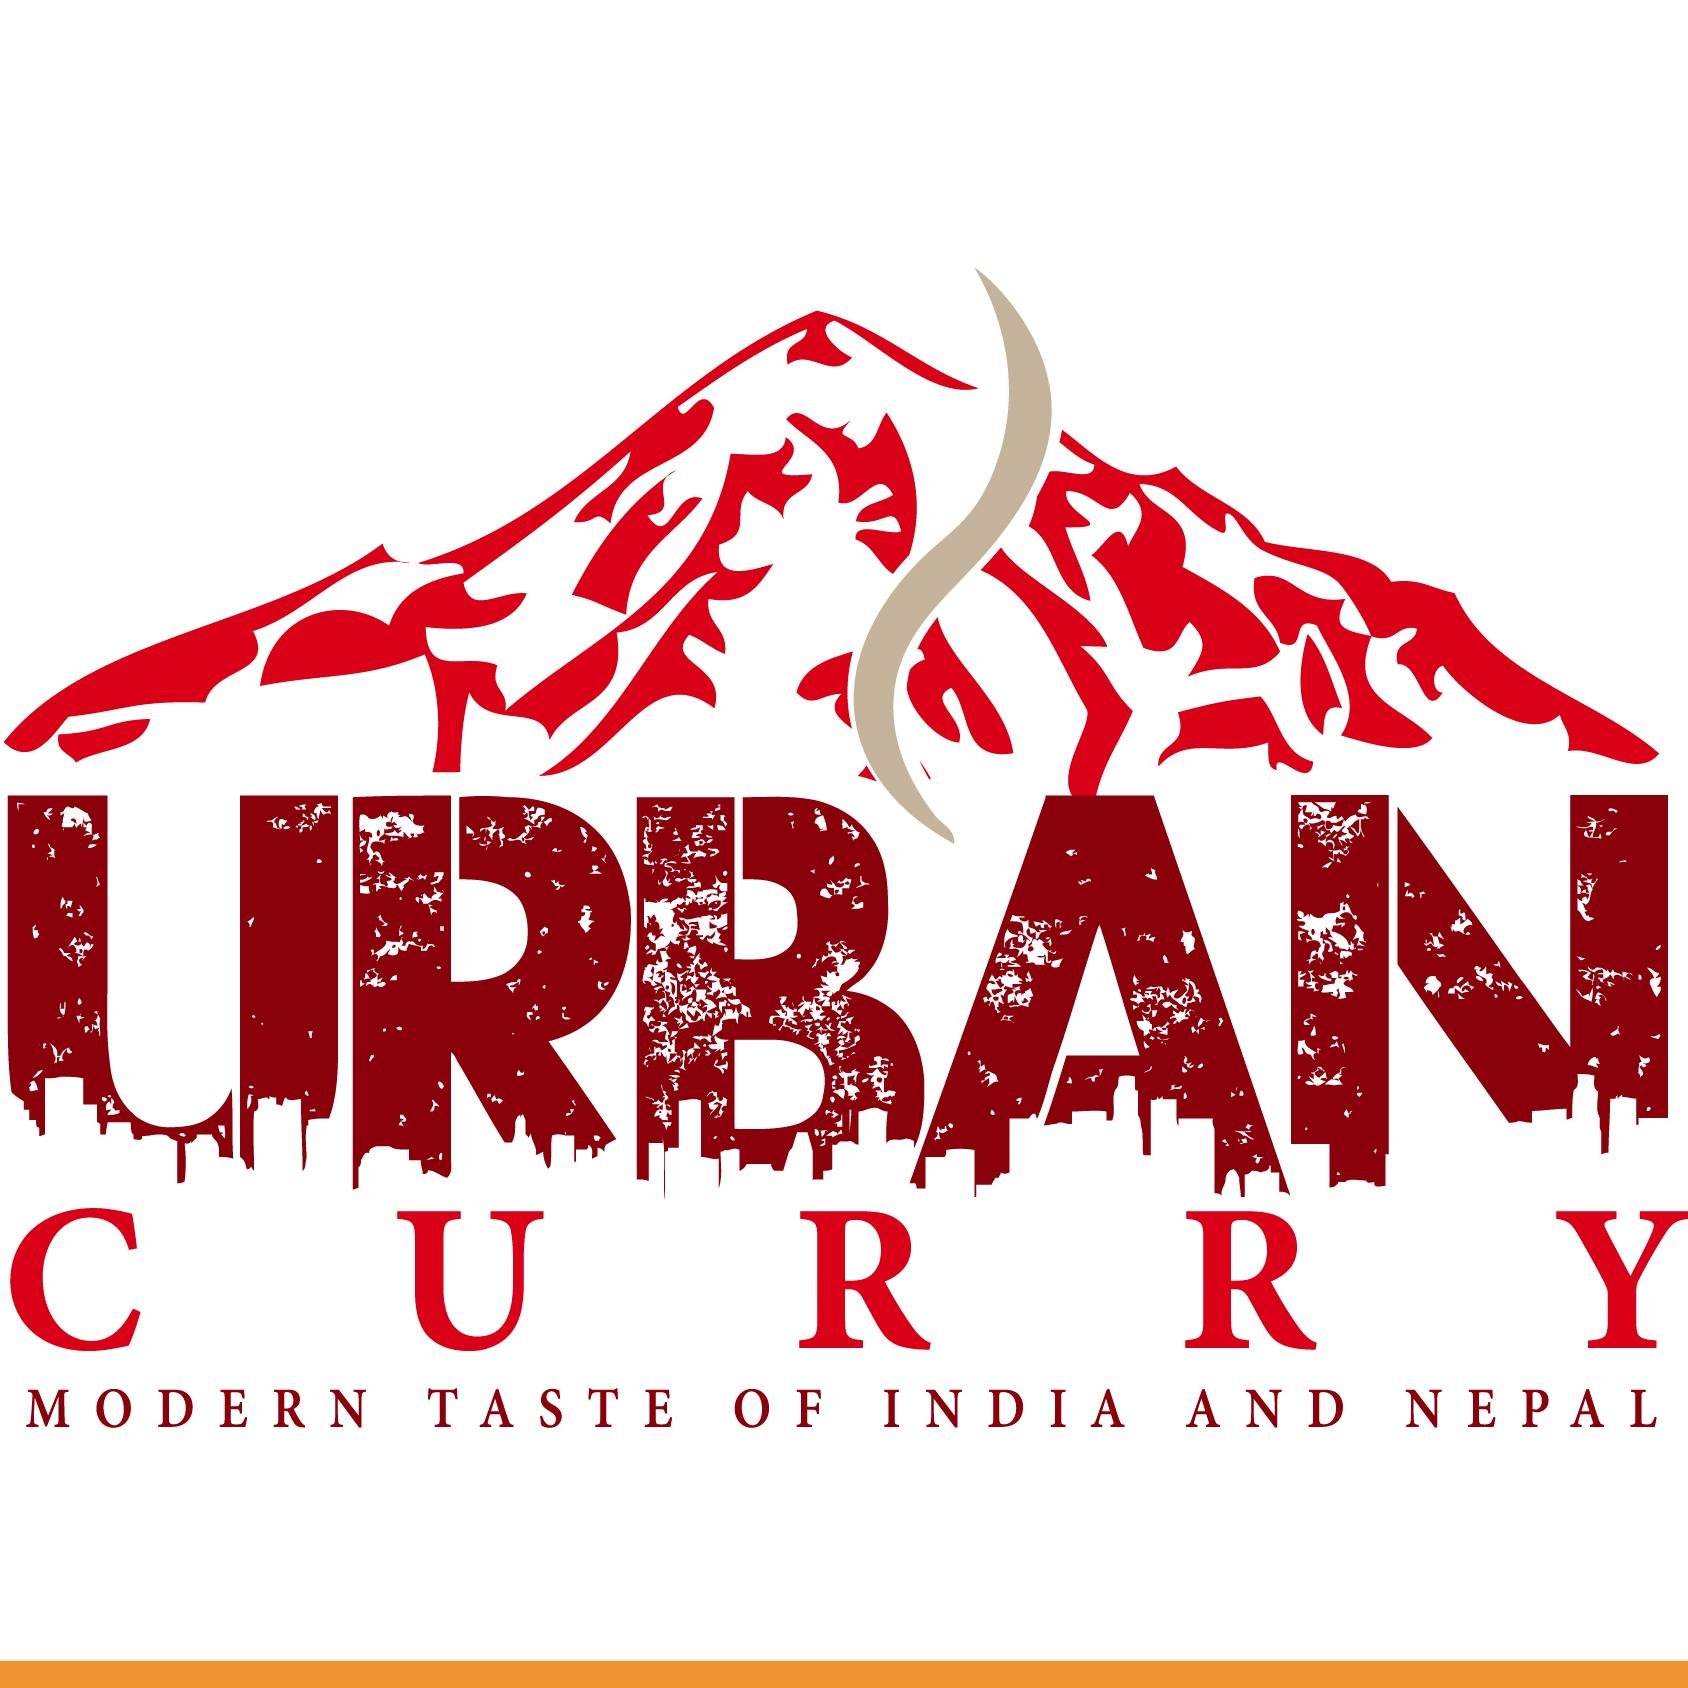 Urban Curry